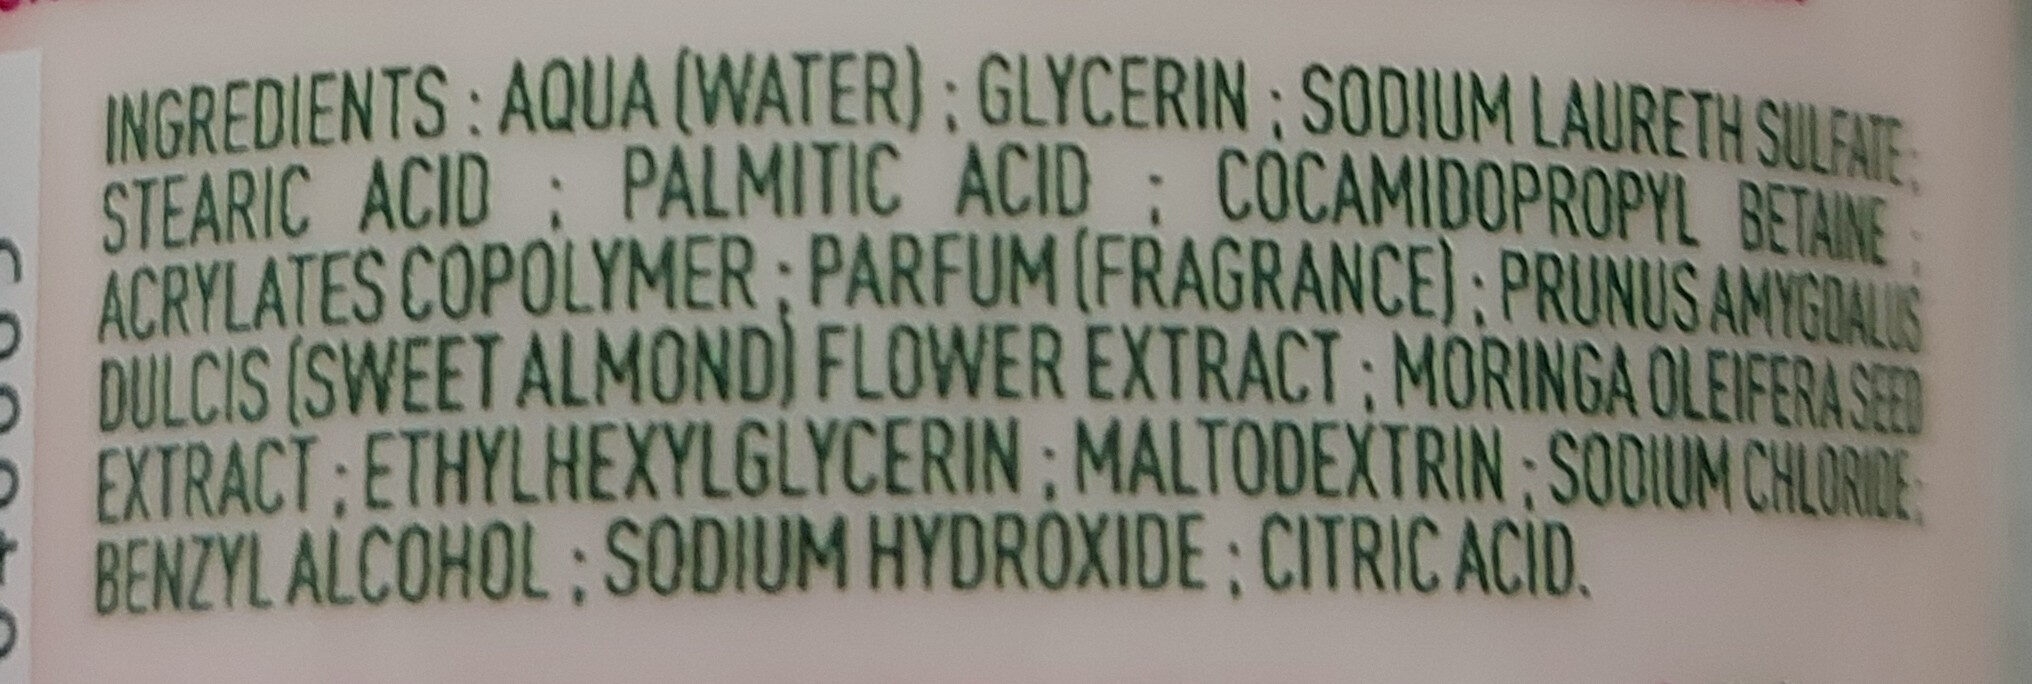 crème nettoyante anti-pollution - Ingredients - fr